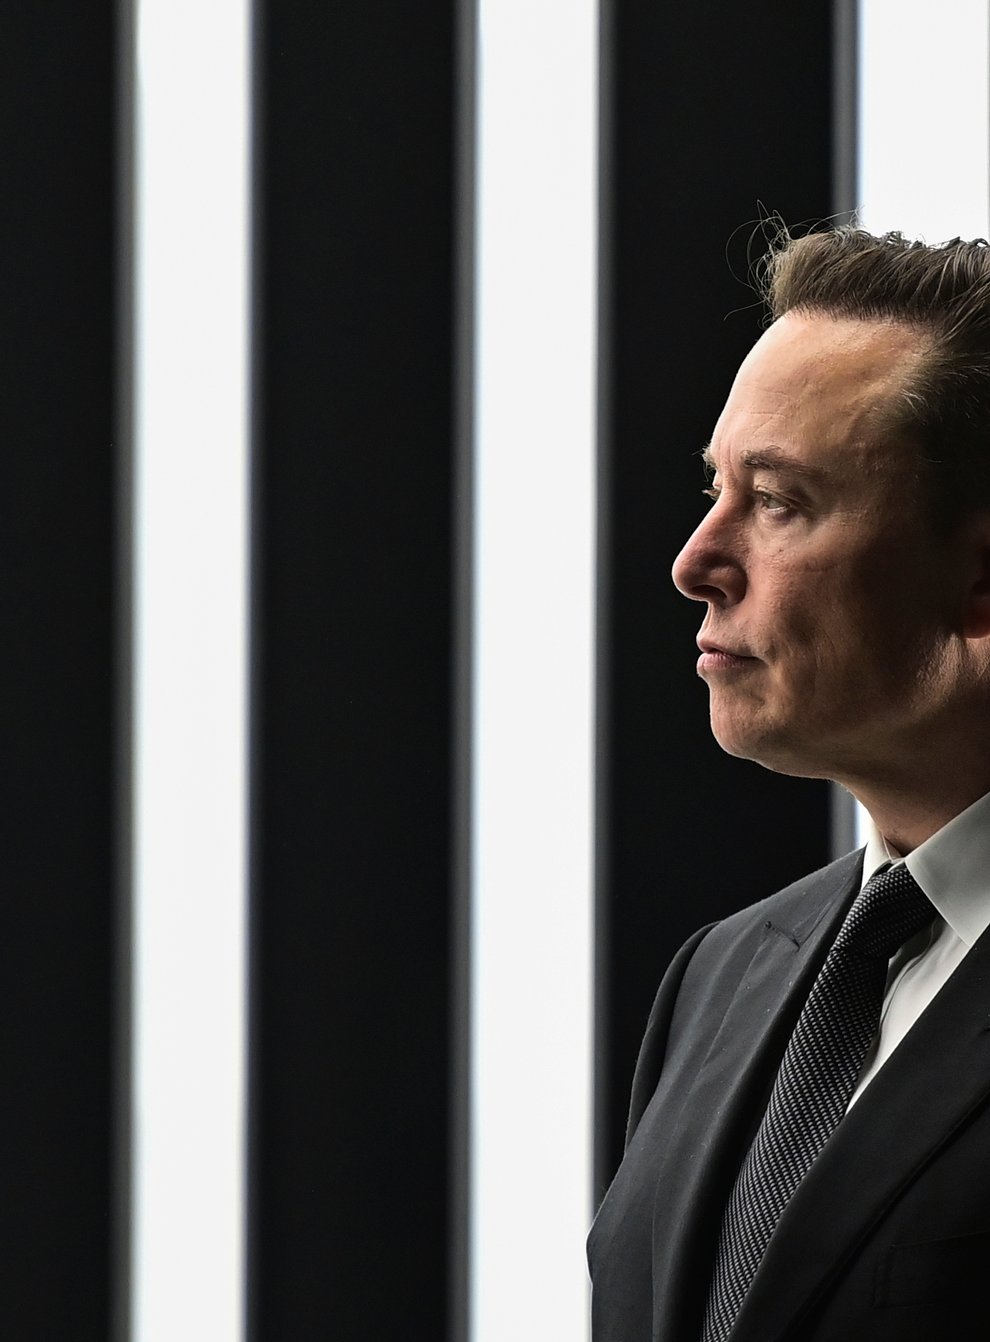 Elon Musk has reached an agreement to buy Twitter for £34.5 billion (Patrick Pleul/Pool Photo via AP)